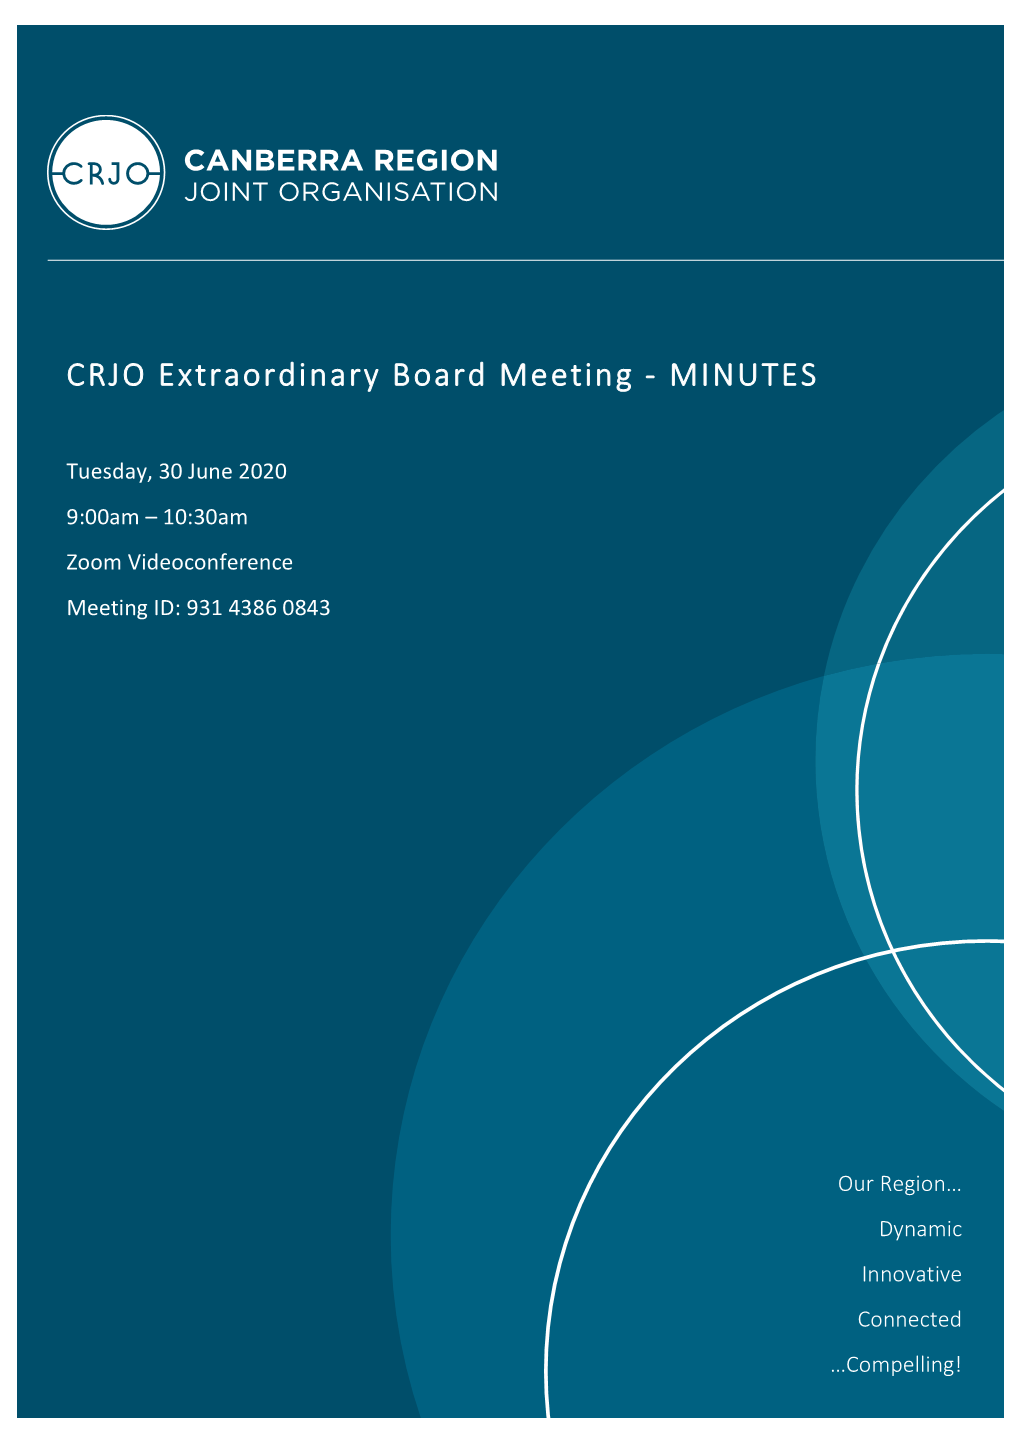 CRJO Extraordinary Board Meeting – Tuesday, 30 June 2020